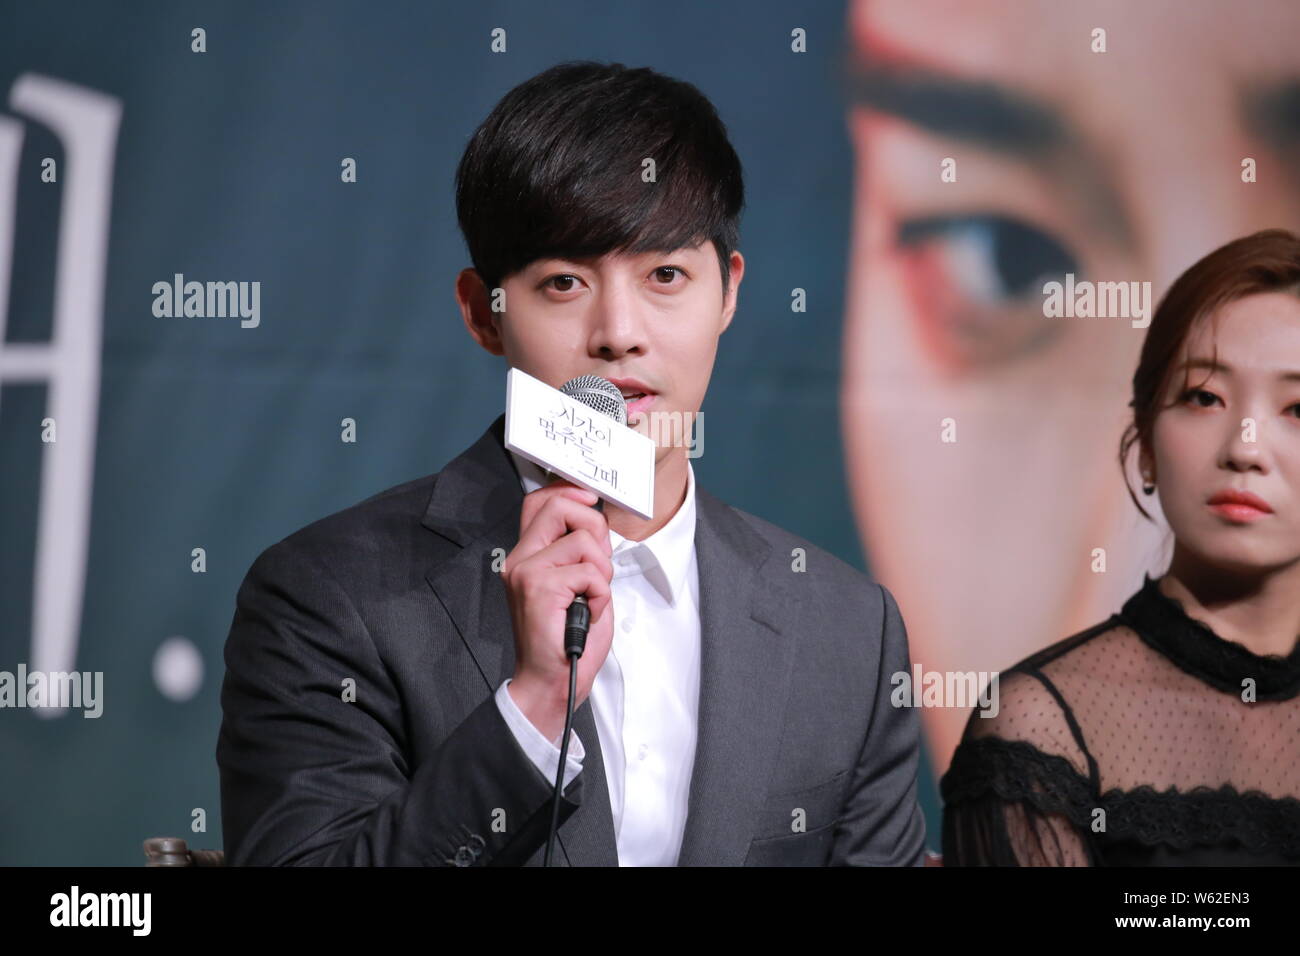 South Korean Singer And Actor Kim Hyun Joong Attends A Press